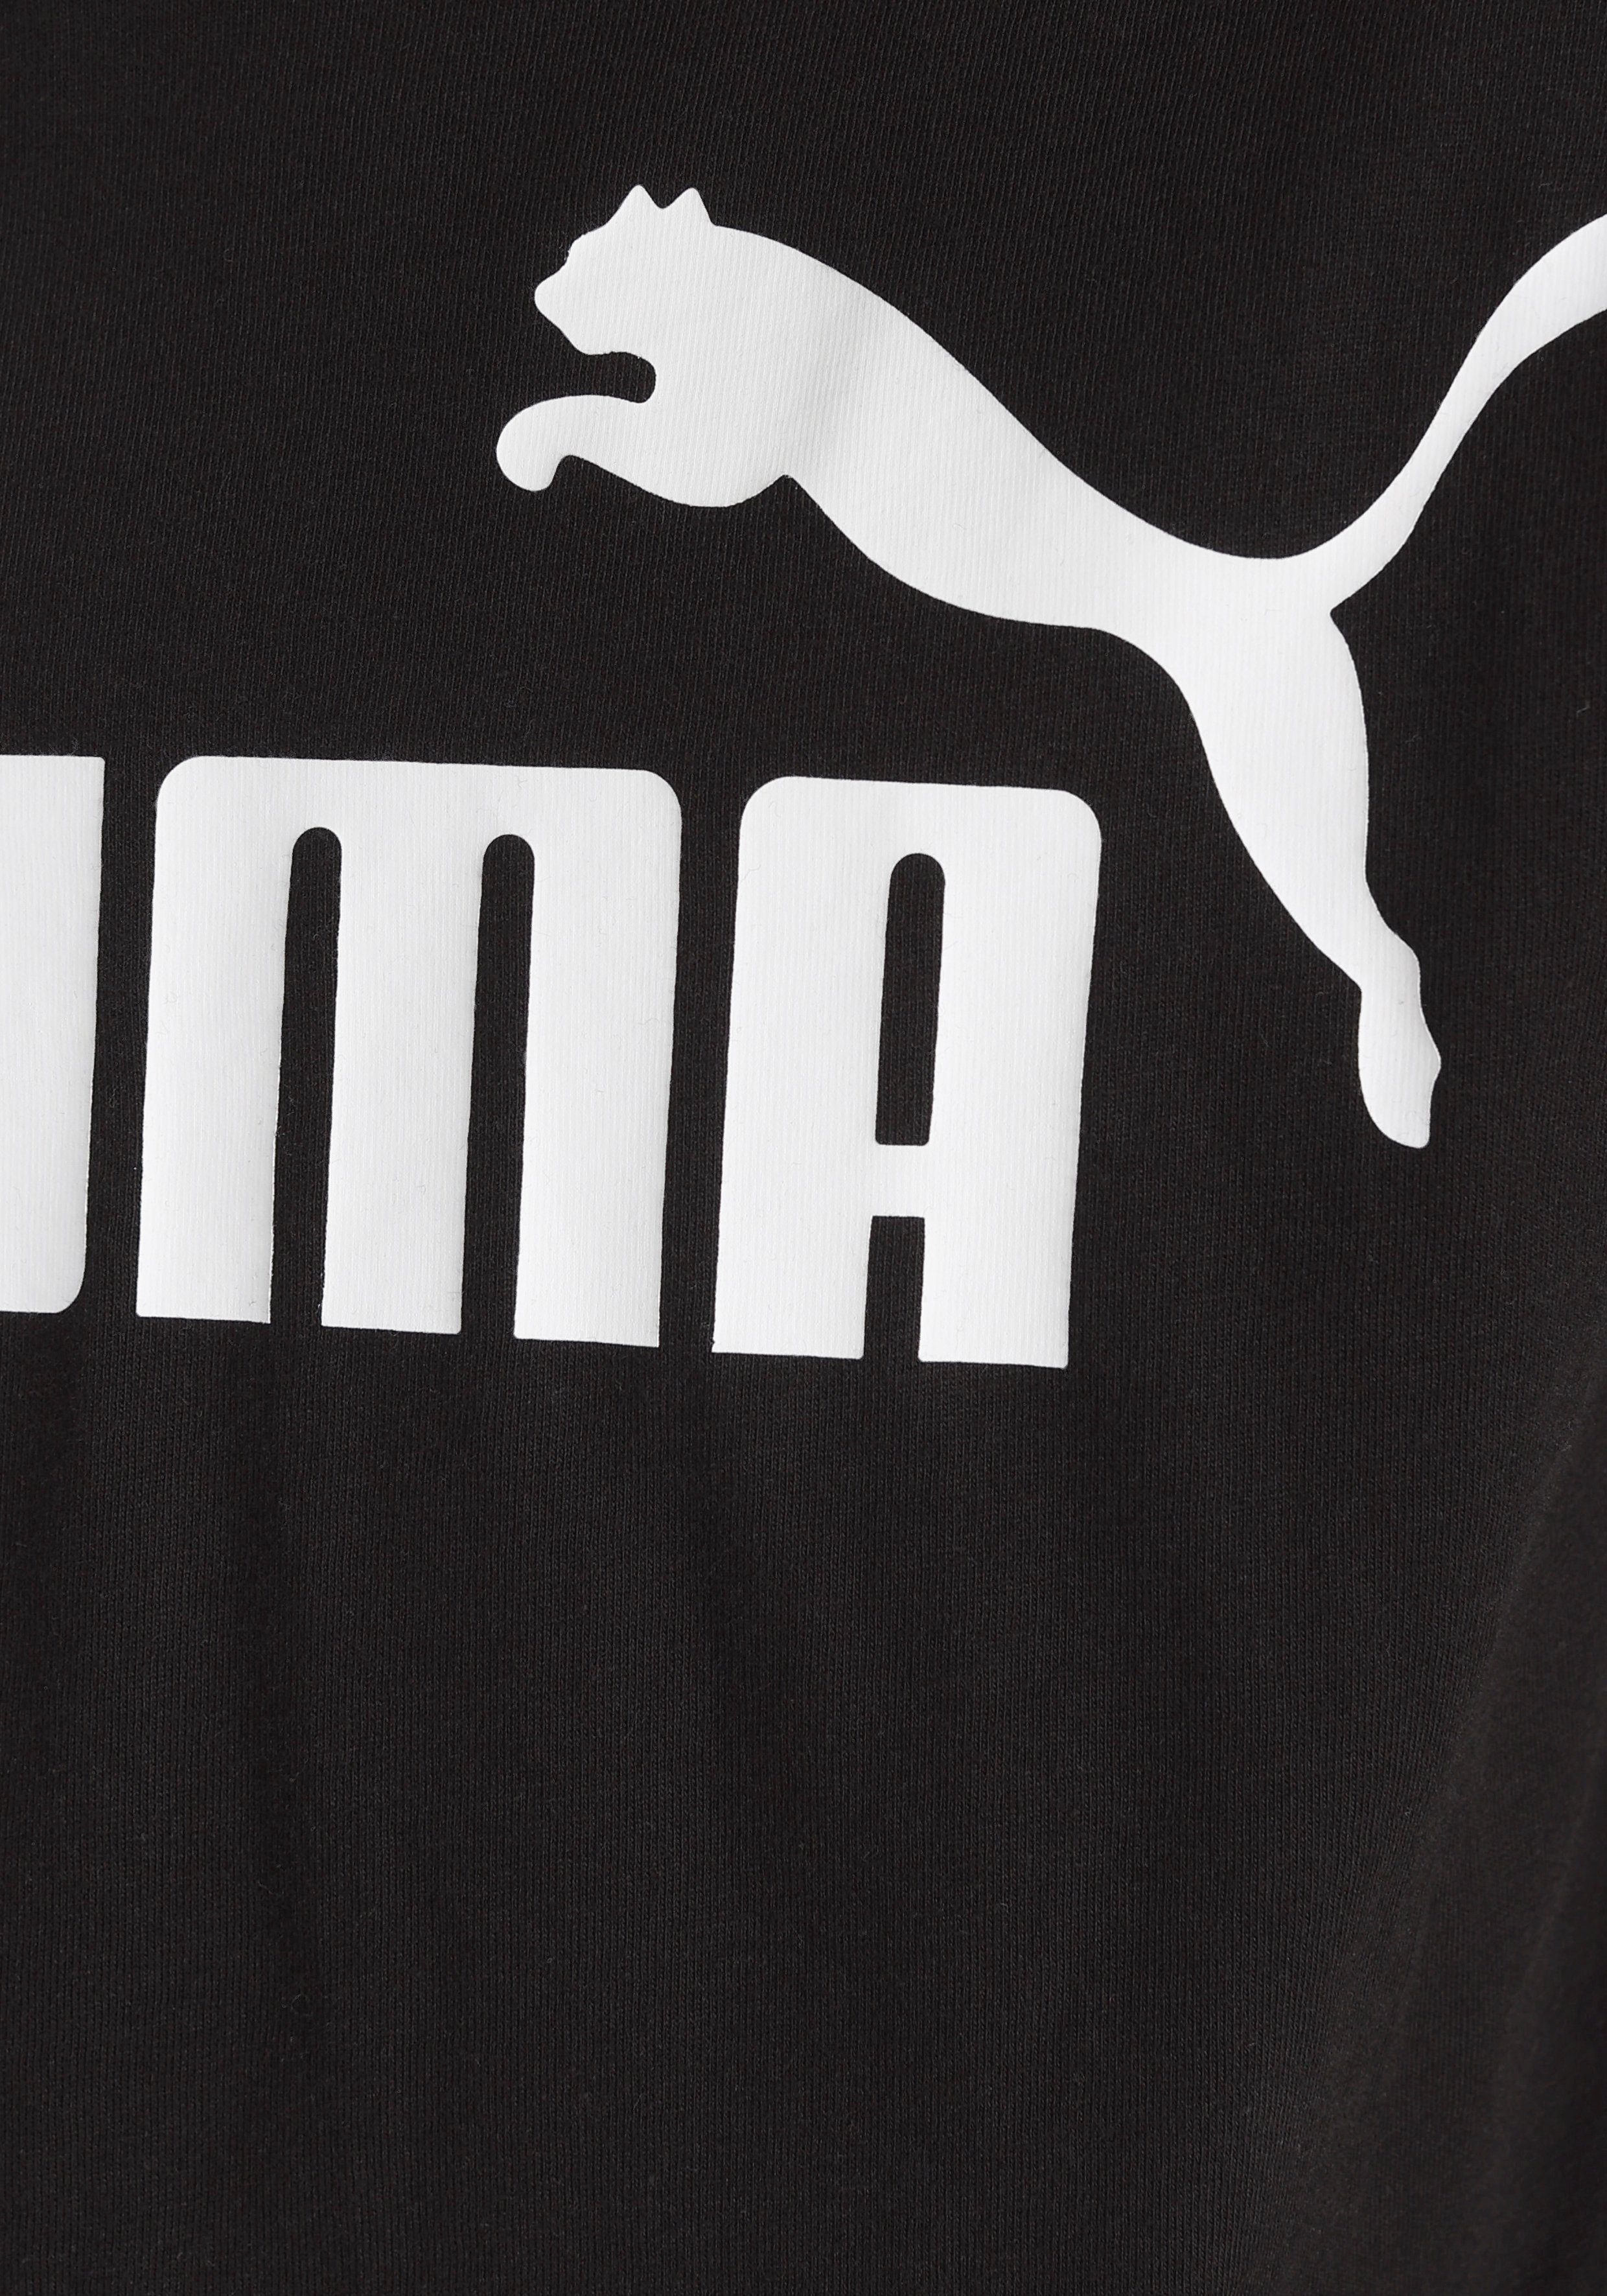 PUMA T-Shirt ESS B TEE Puma Black LOGO